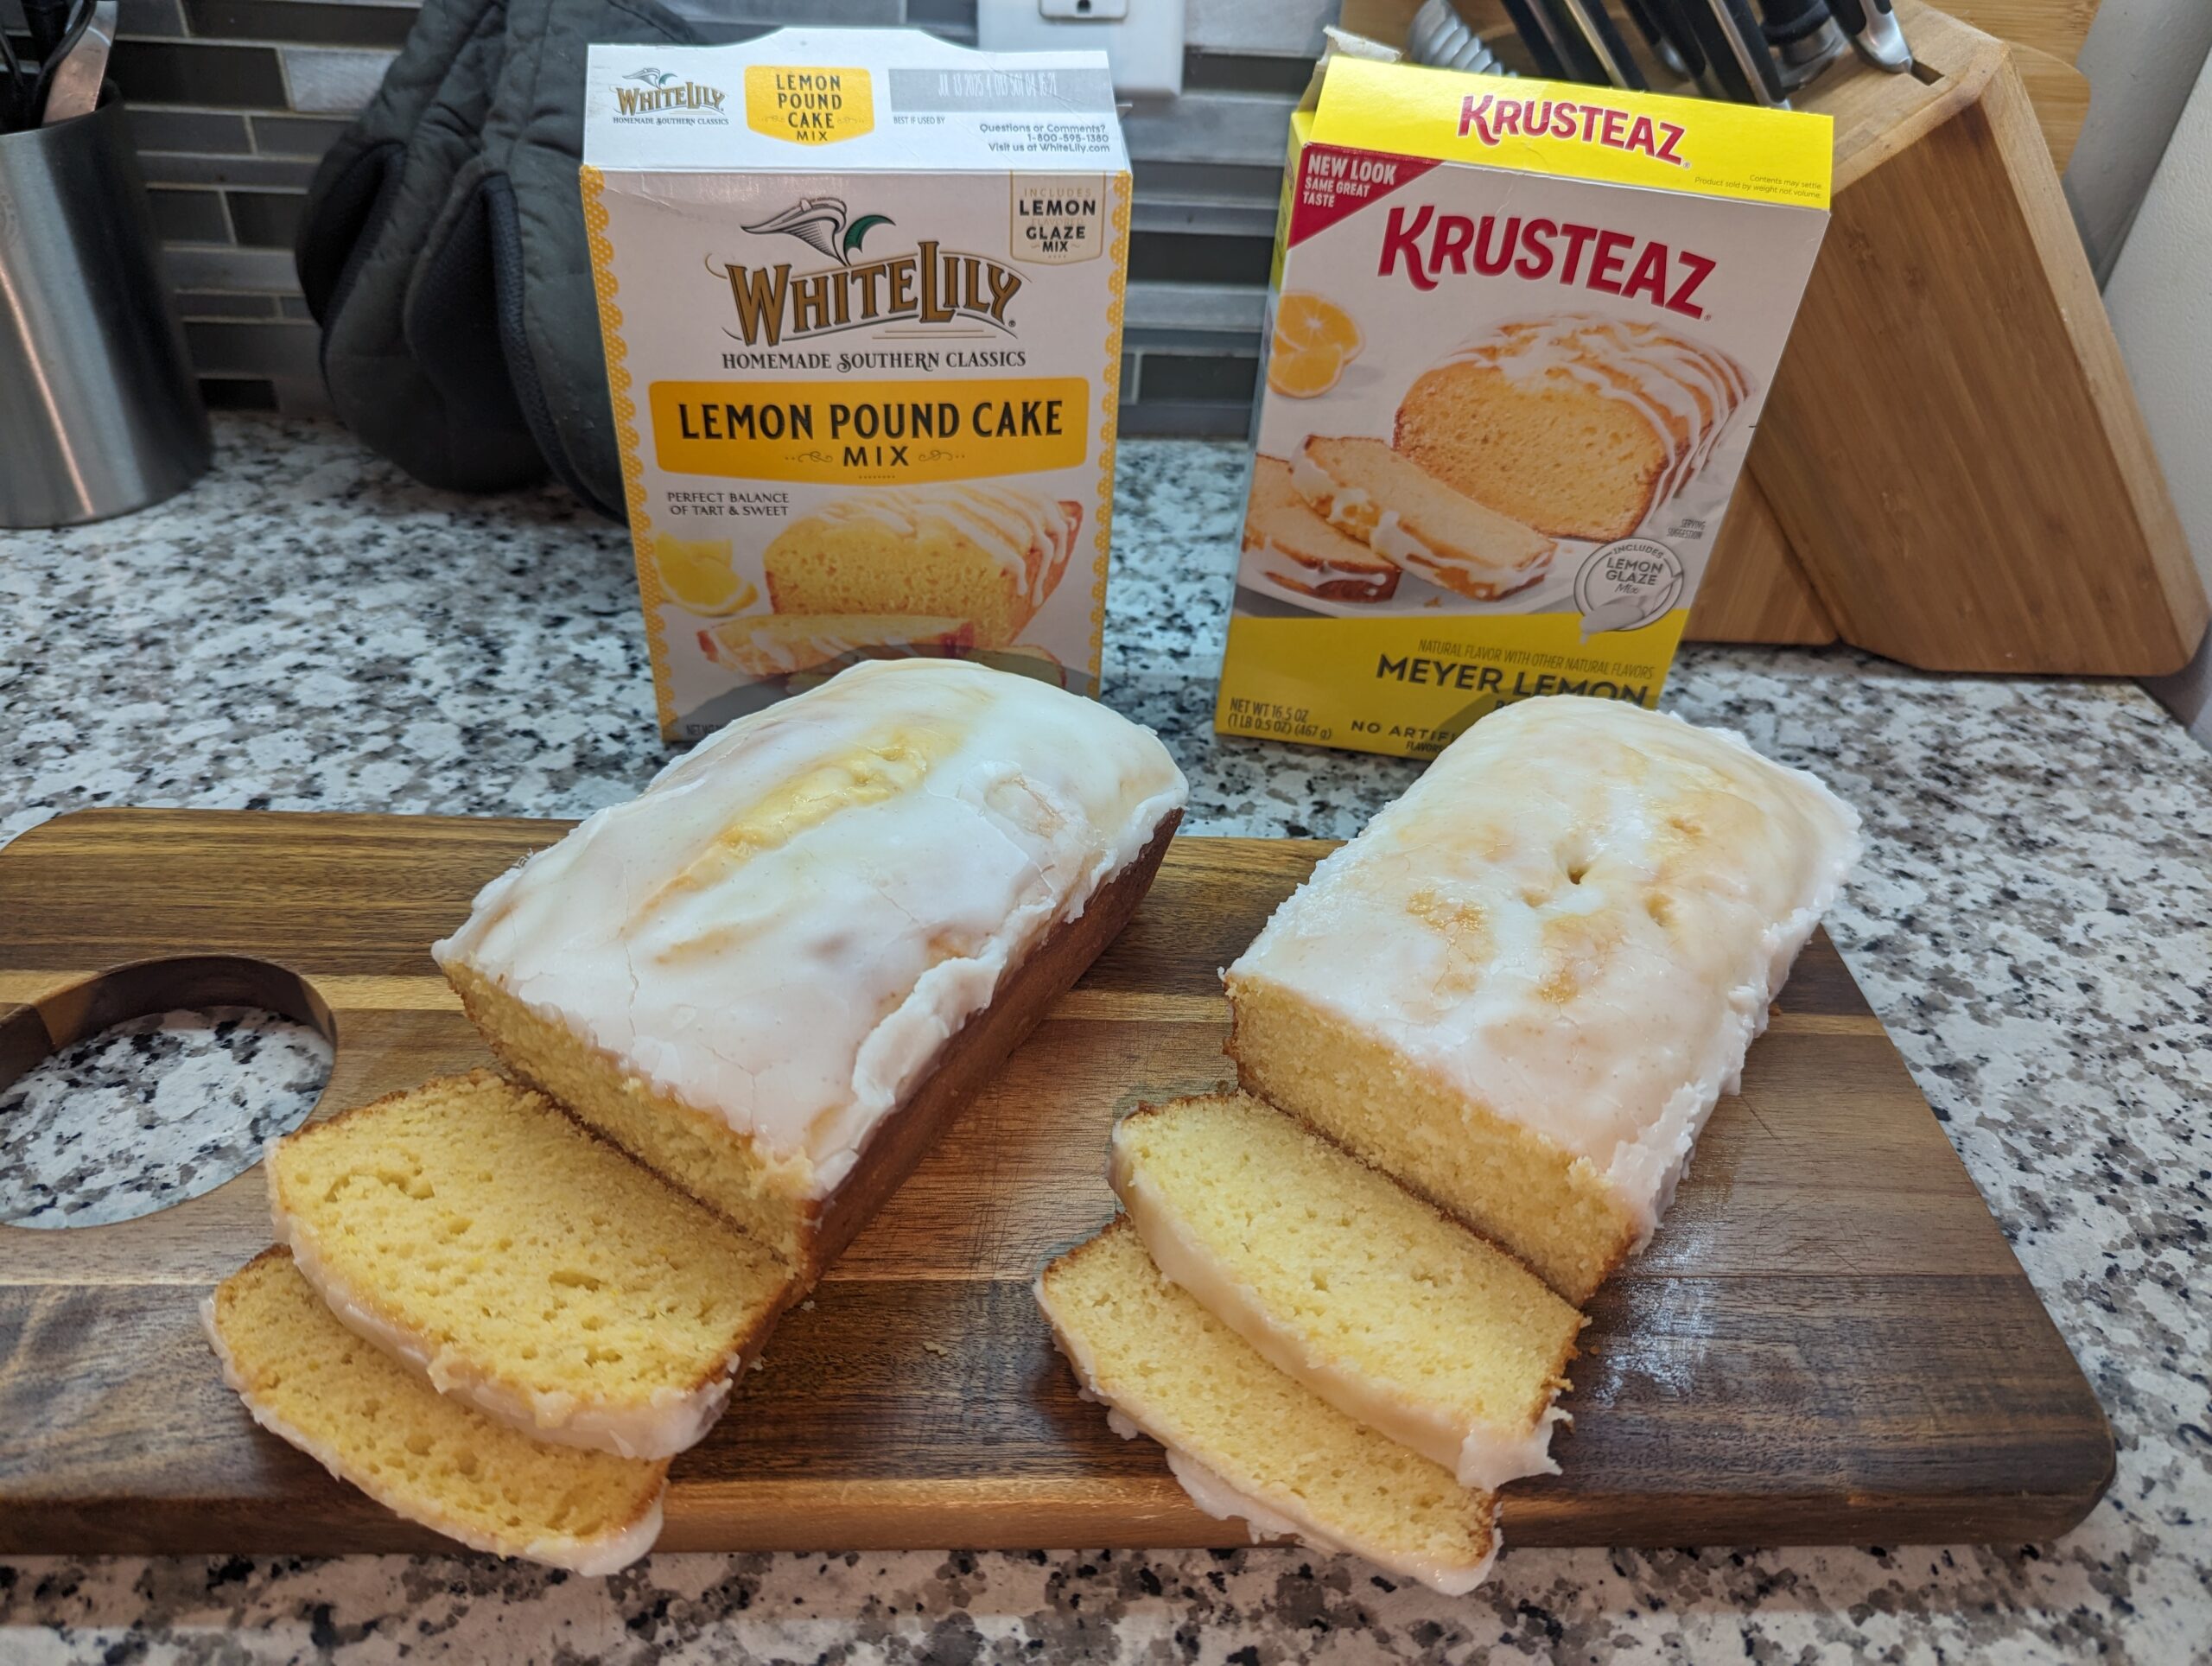 Comparison of Whitelily and Krusteaz lemon pound cake mixes